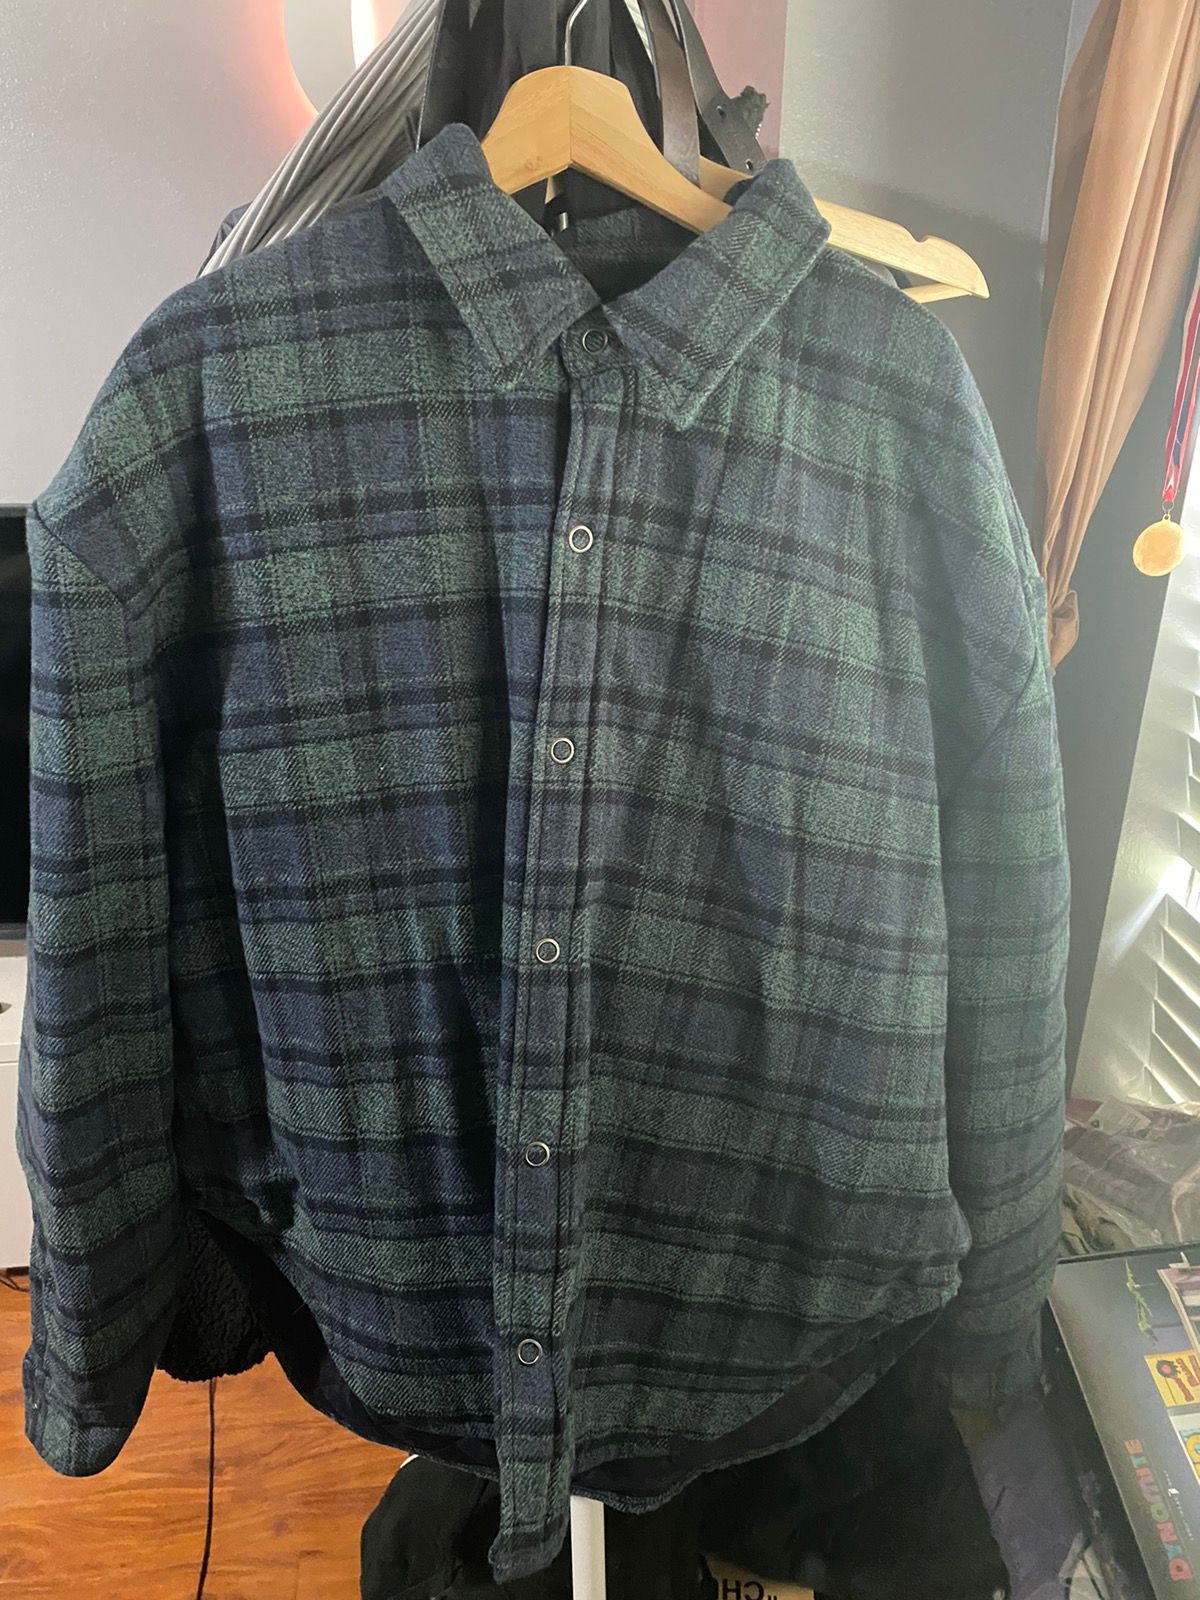 Japanese Brand Vuja de padded flannel jacket size M tried on | Grailed